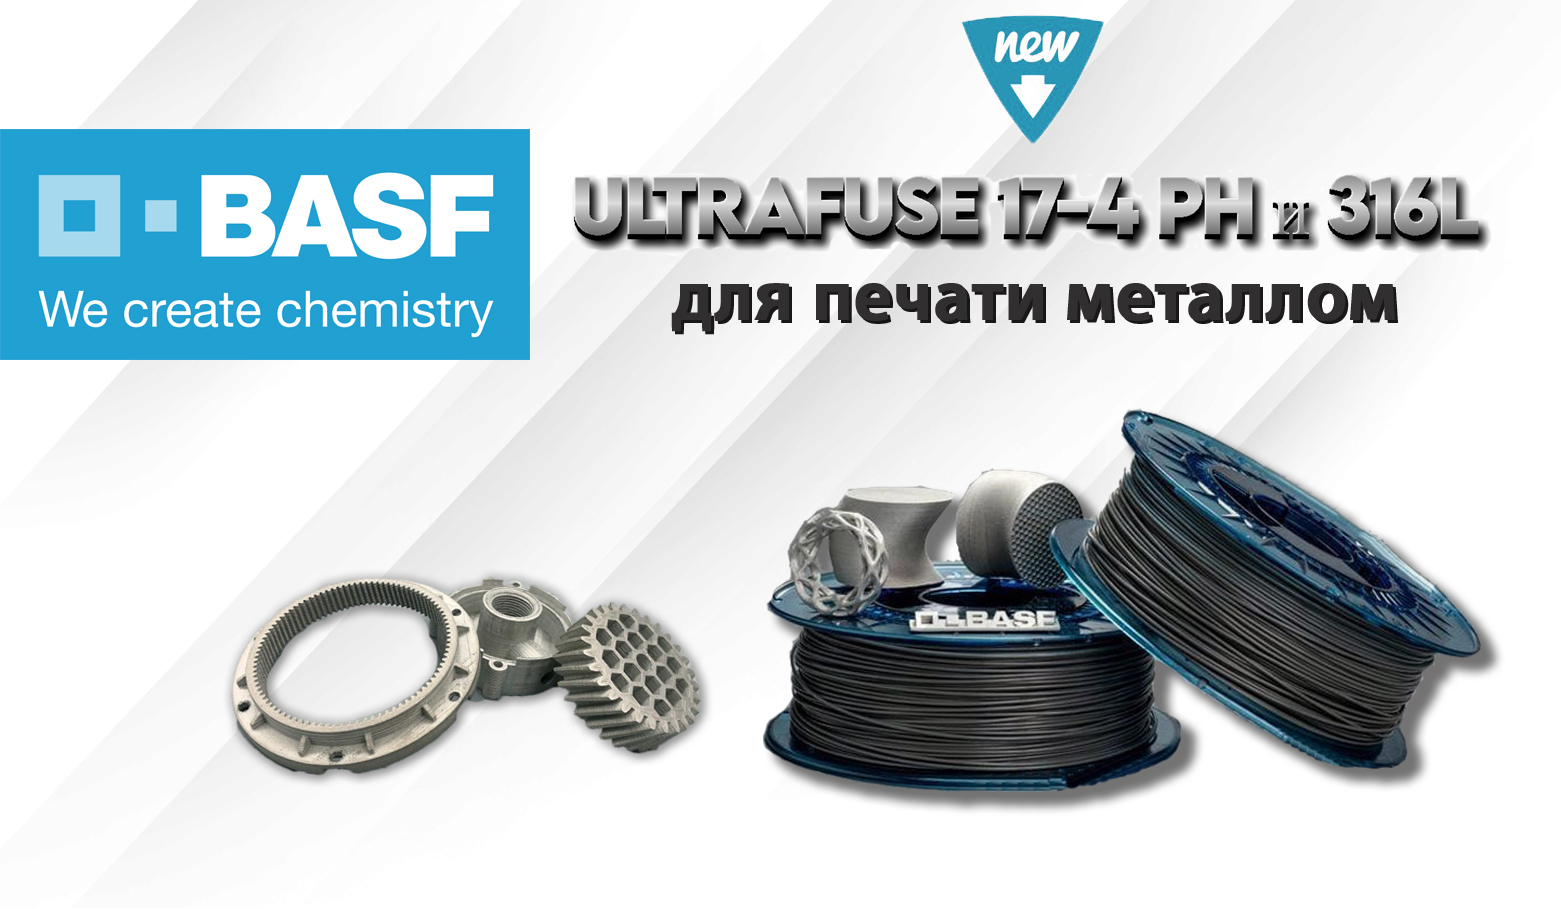 Новинки на складе! Материалы для печати металлом Ultrafuse от BASF